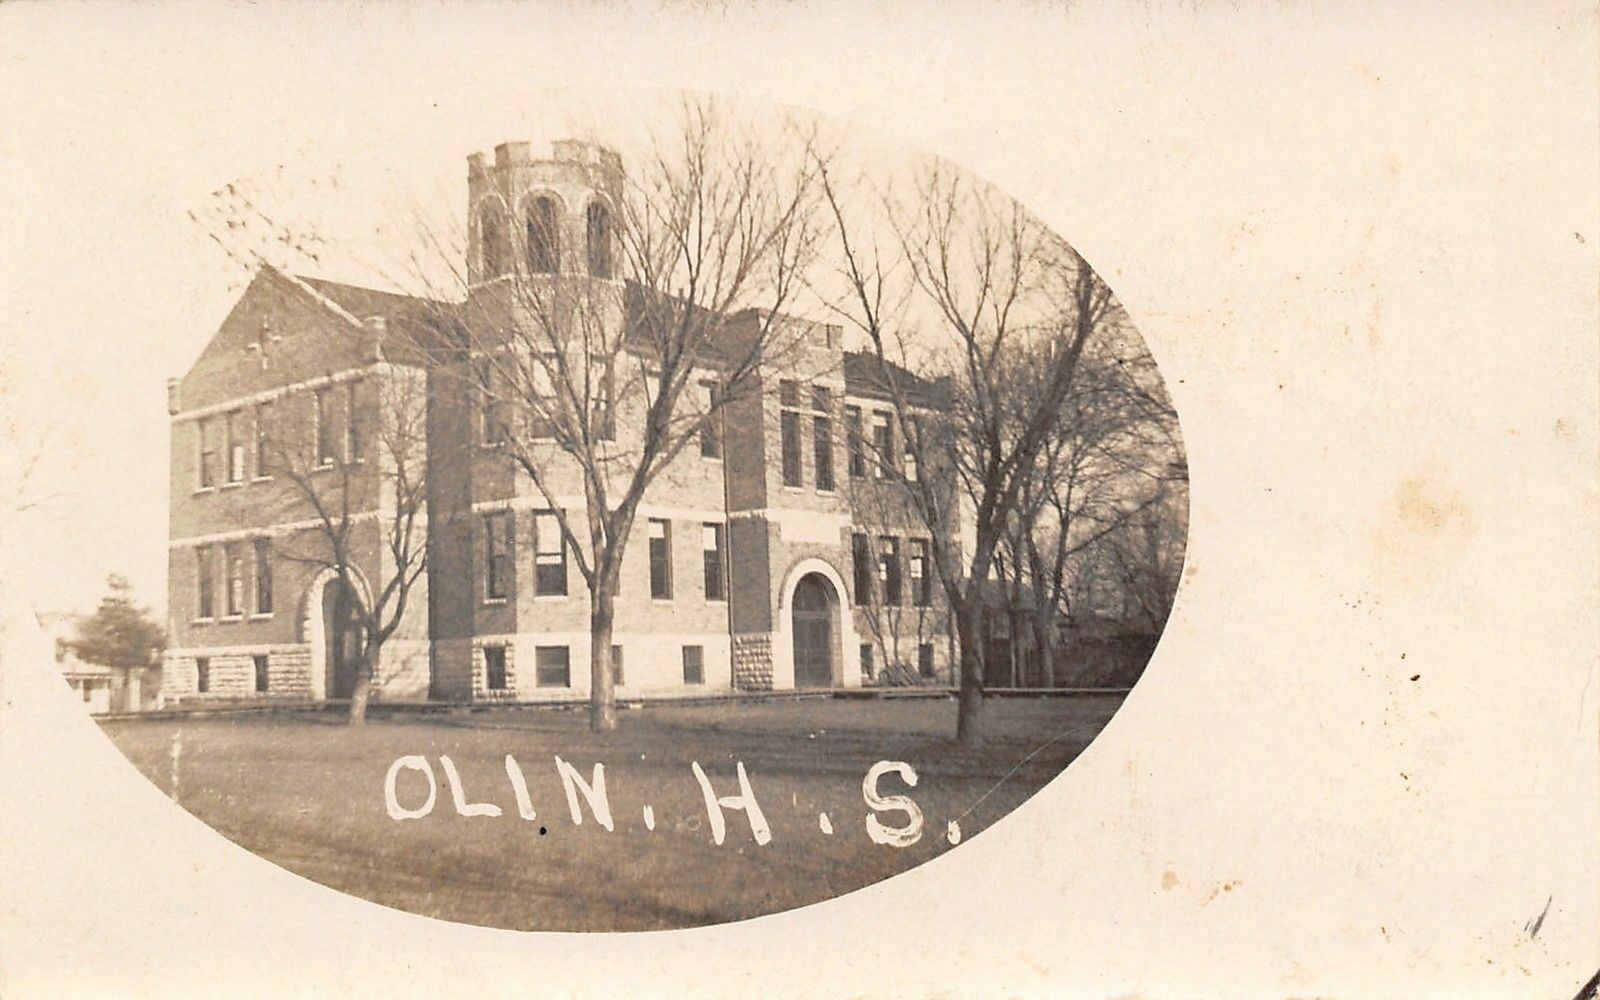 Olin High School, Olin, Iowa